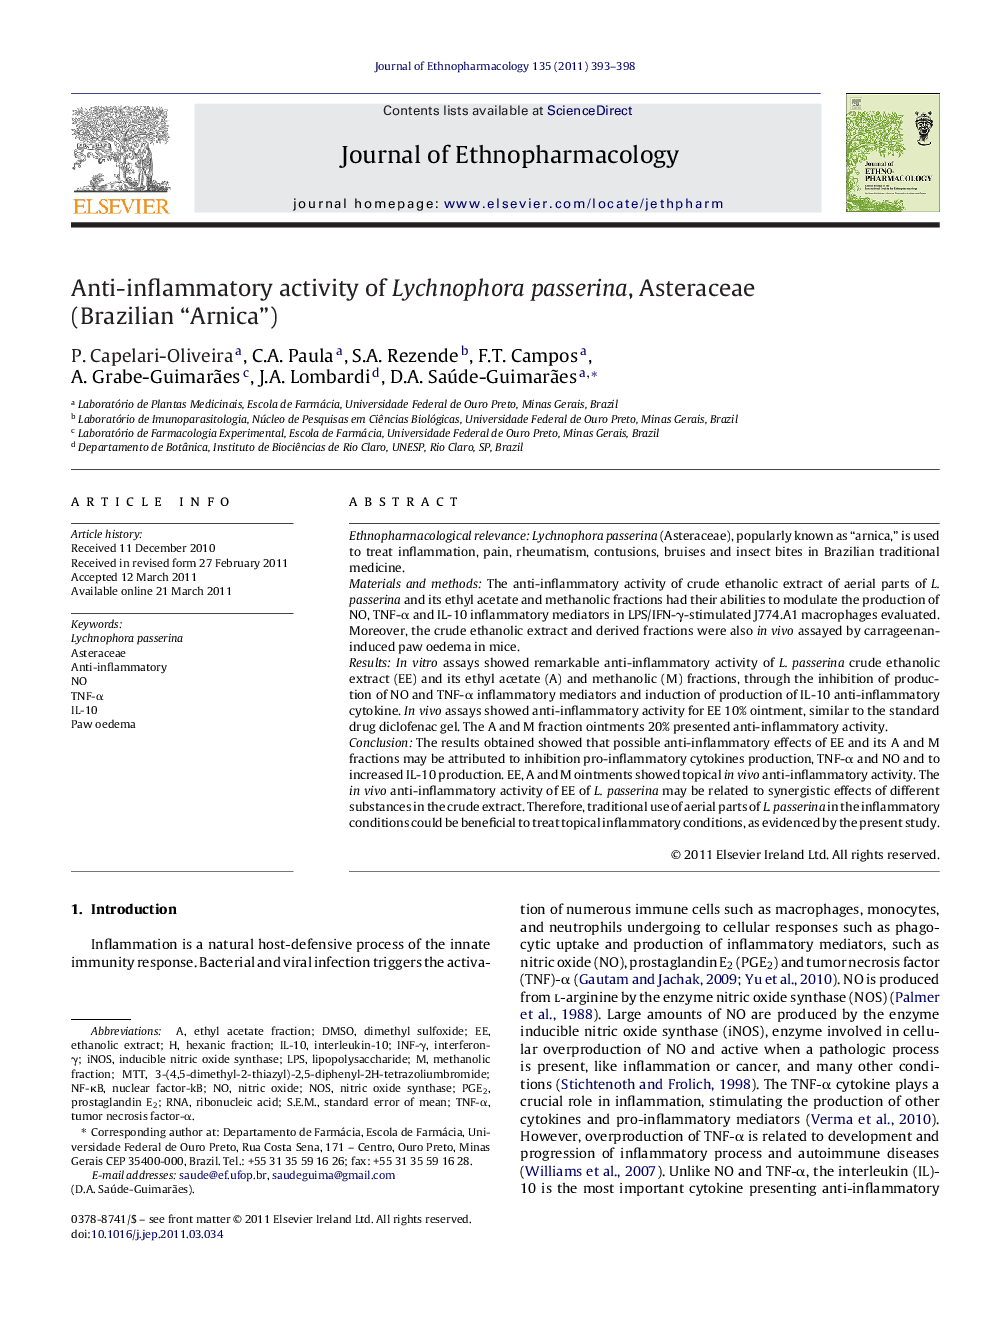 Anti-inflammatory activity of Lychnophora passerina, Asteraceae (Brazilian “Arnica”)